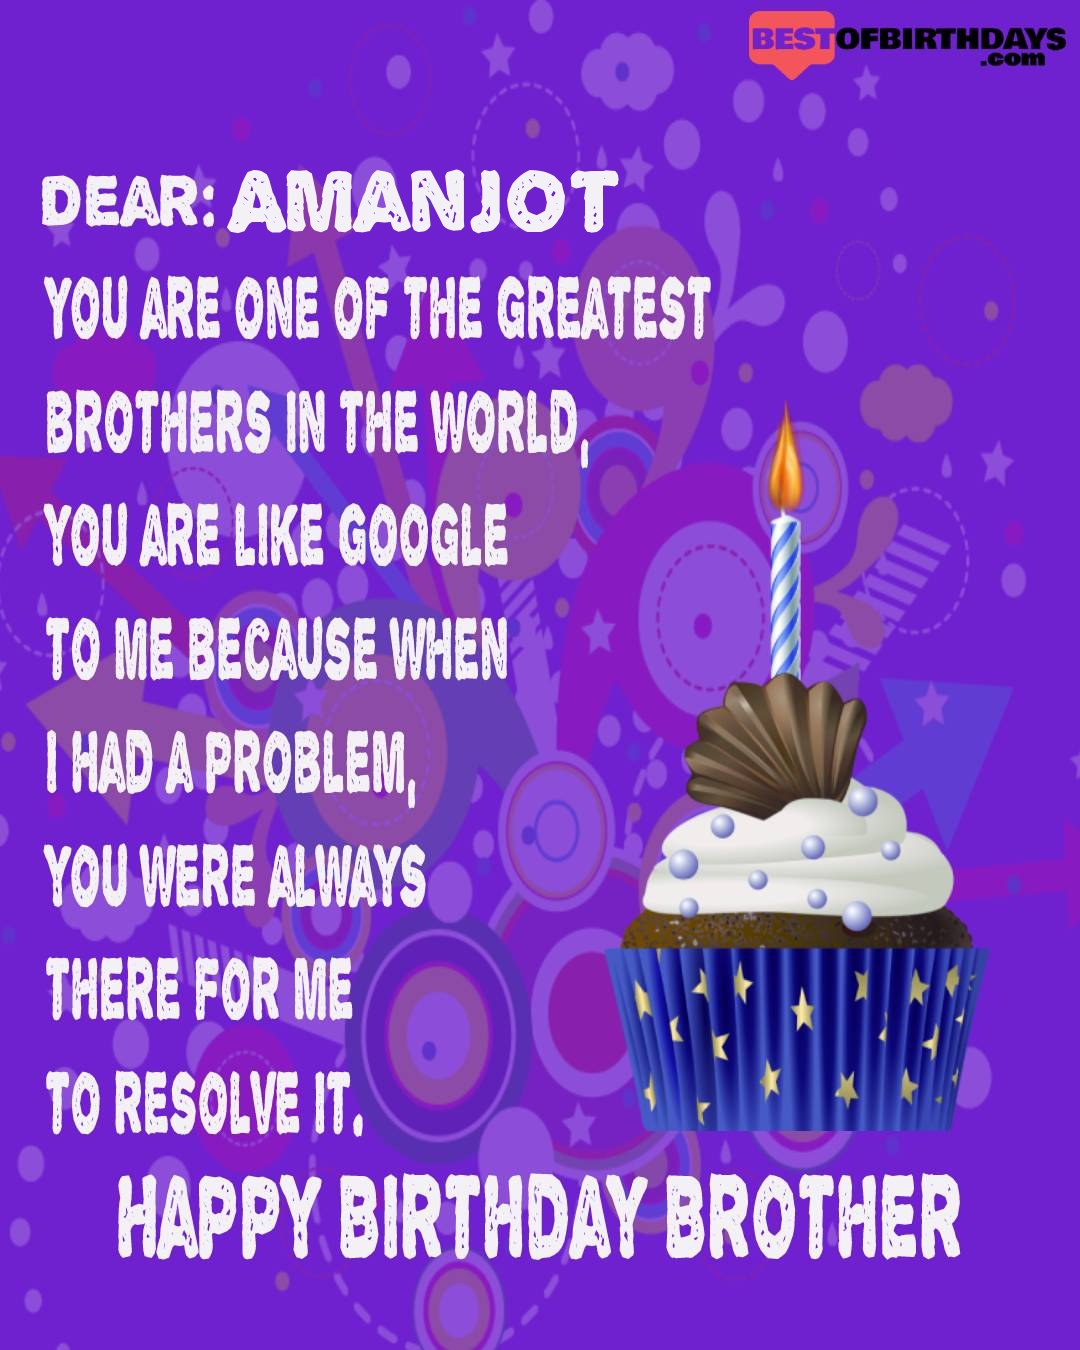 Happy birthday amanjot bhai brother bro